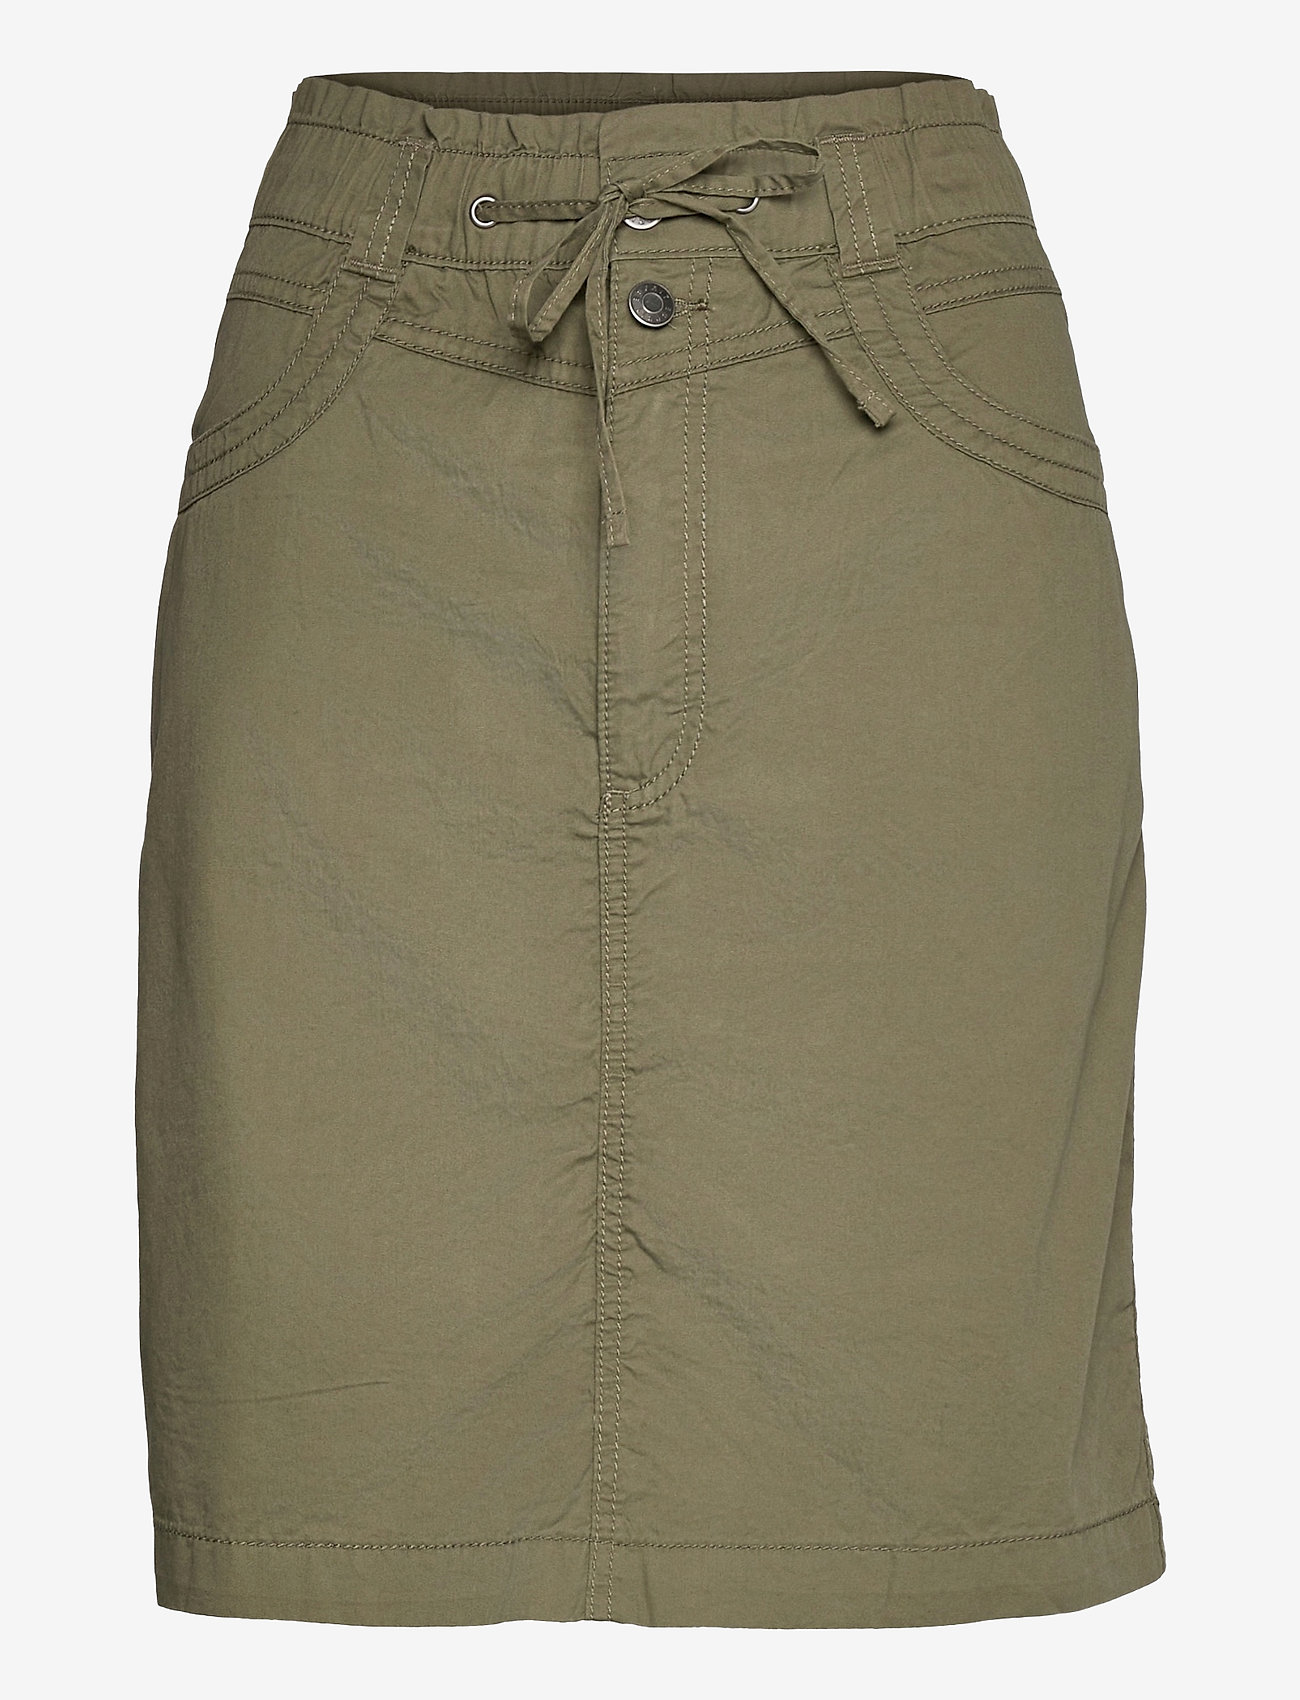 Esprit Casual - PLAY mini skirt made of 100% organic cotton - short skirts - khaki green - 0